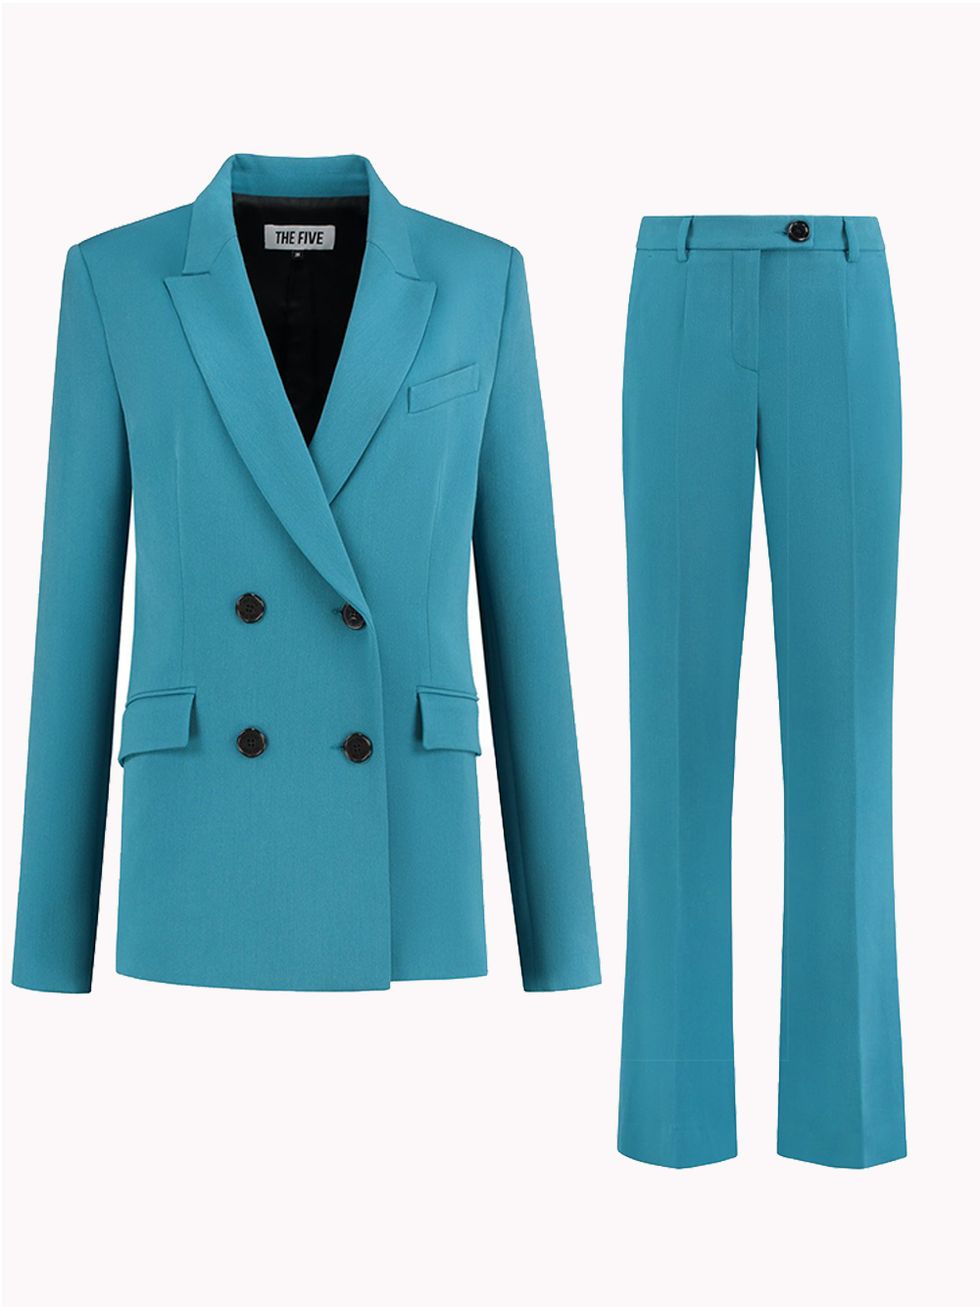 Clothing, Suit, Outerwear, Blazer, Blue, Turquoise, Formal wear, Jacket, Button, Aqua, 